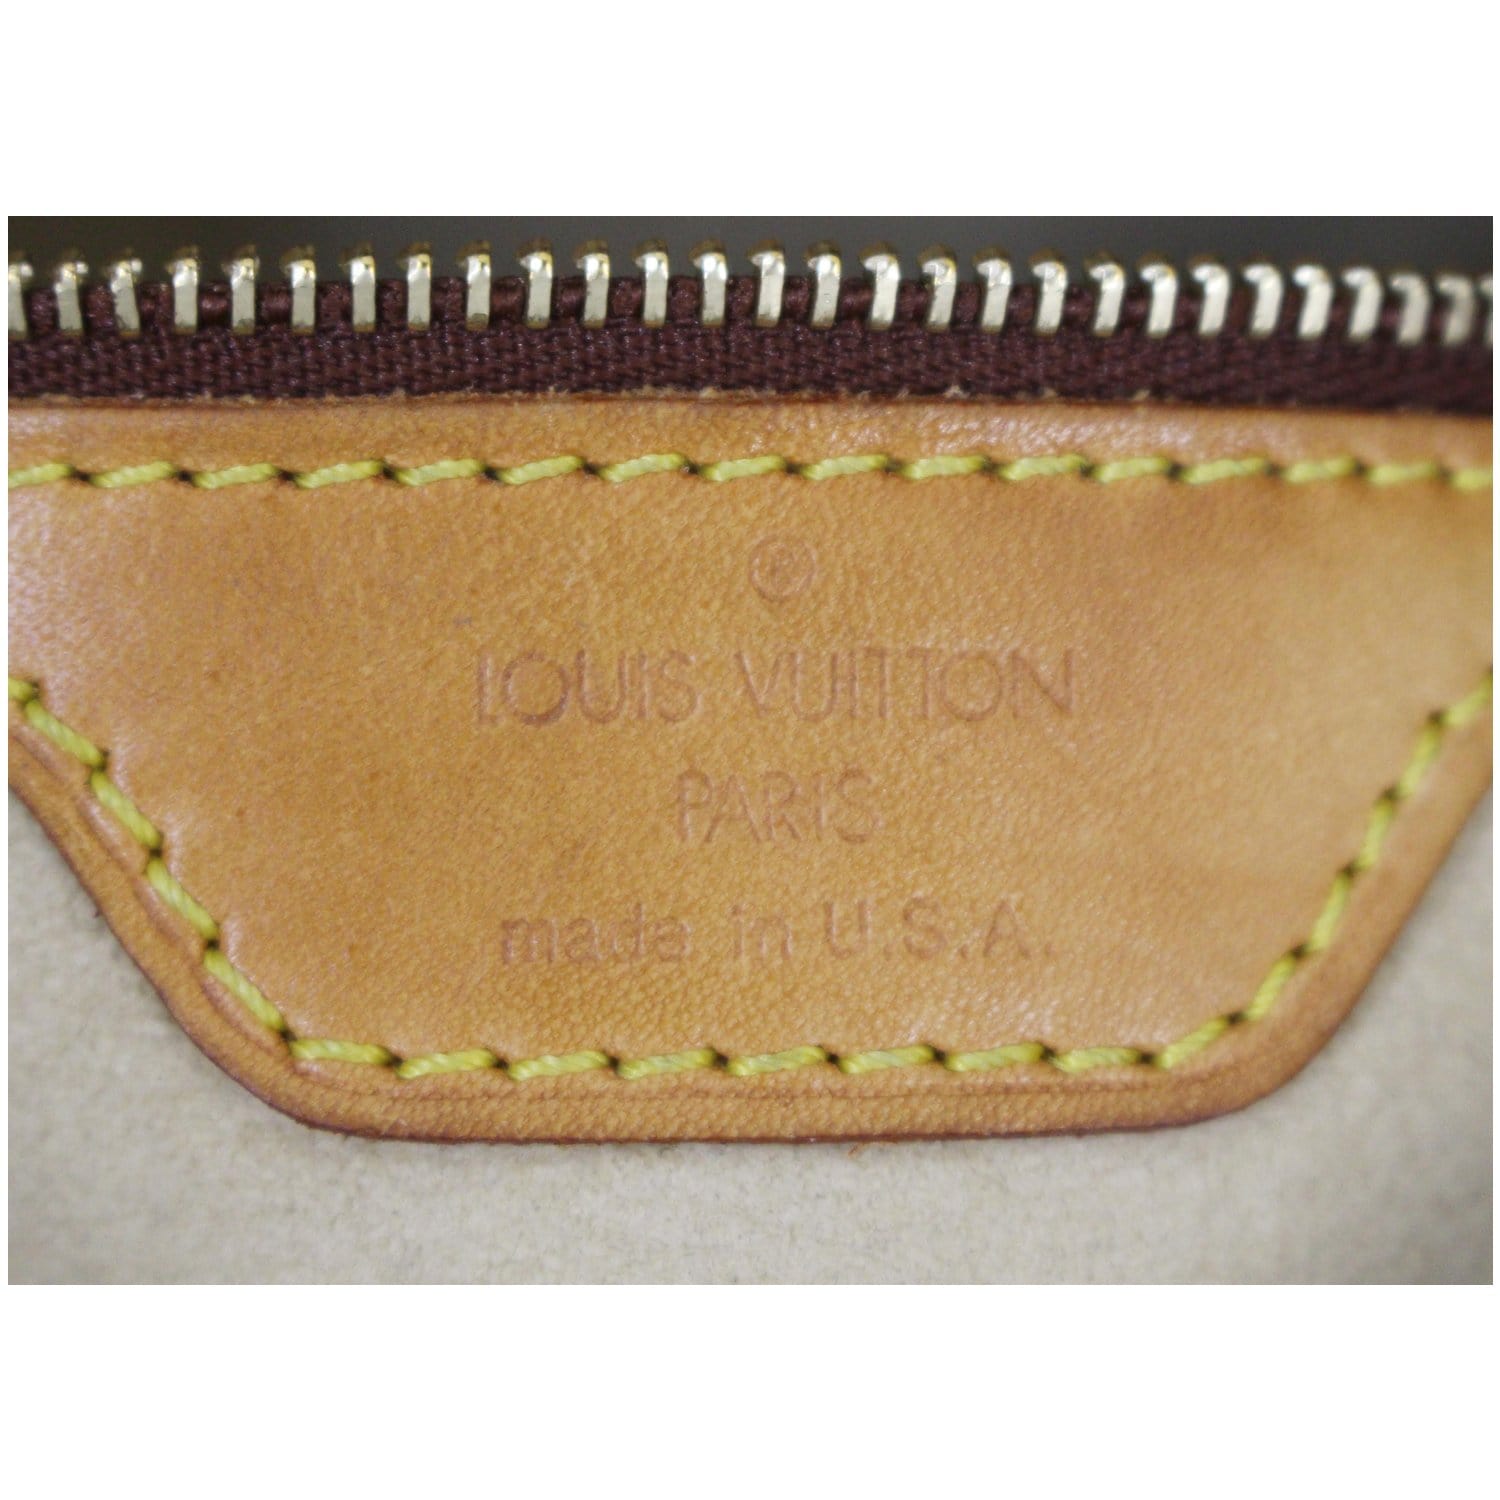 Louis Vuitton Brown Canvas Monogram Looping MM Handbag Louis